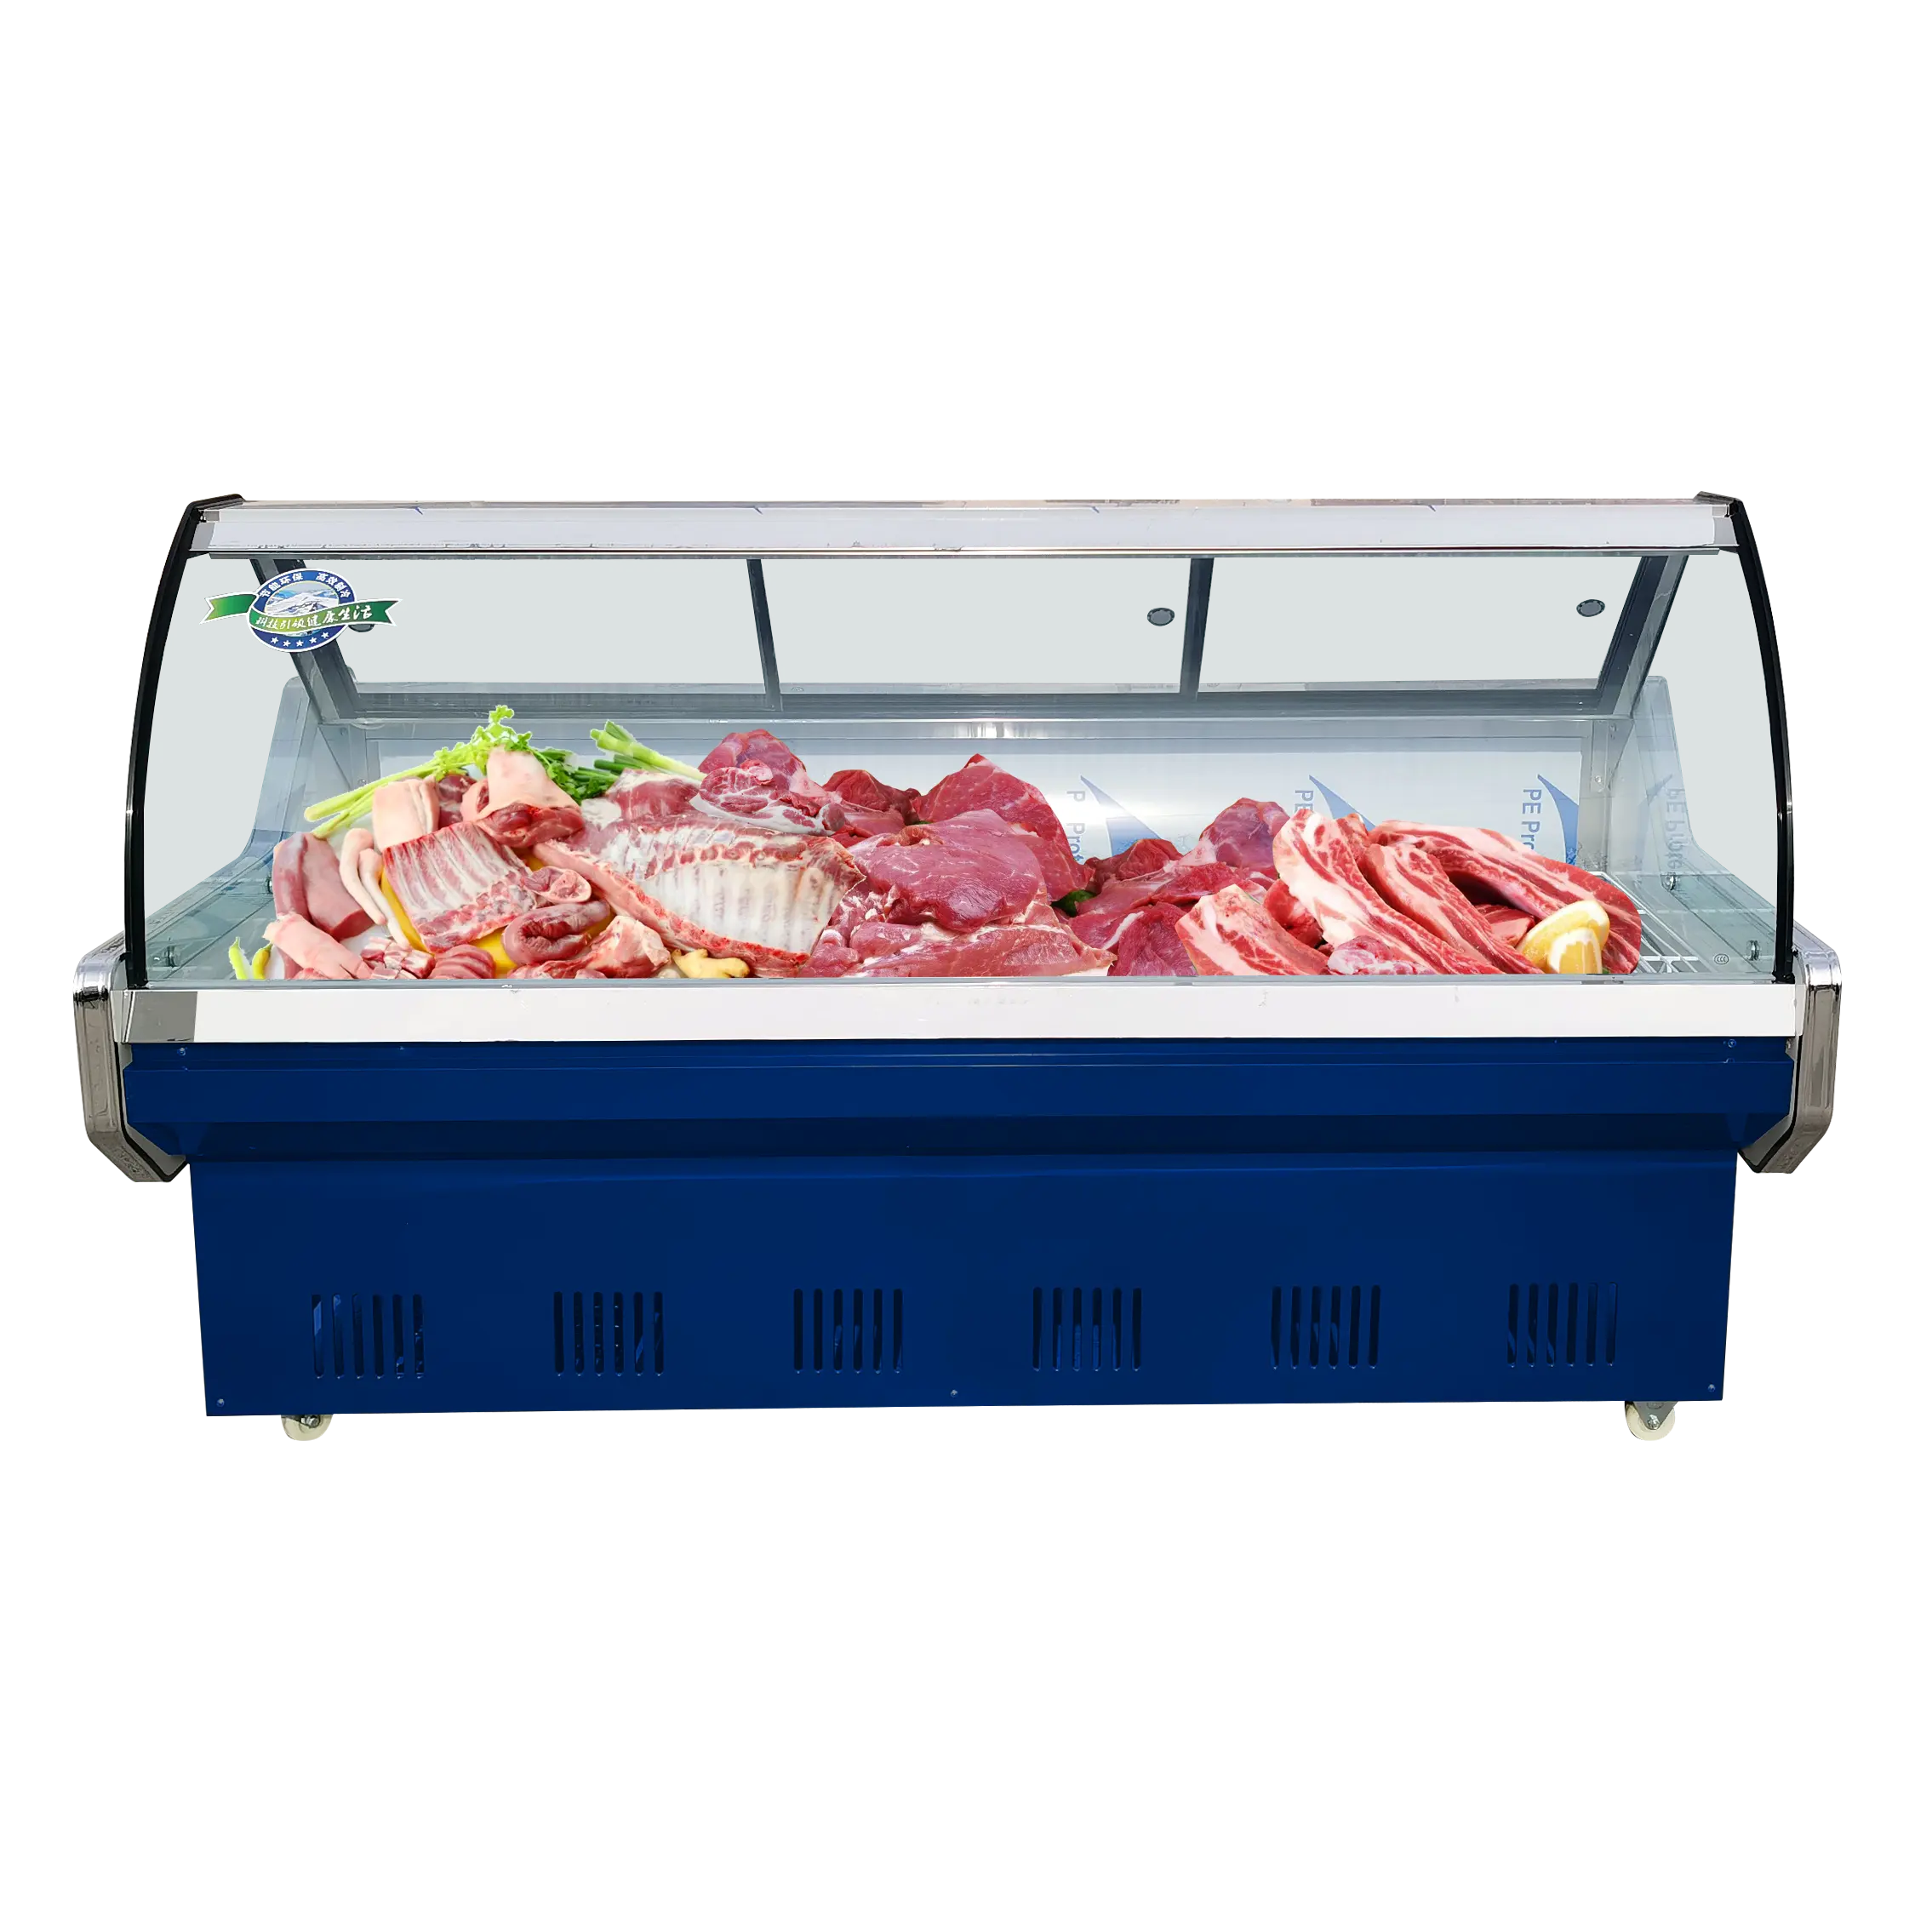 Espositore per carne cruda frigorifero commerciale refrigeratore per carne macelleria display frigoriferi carne fresca